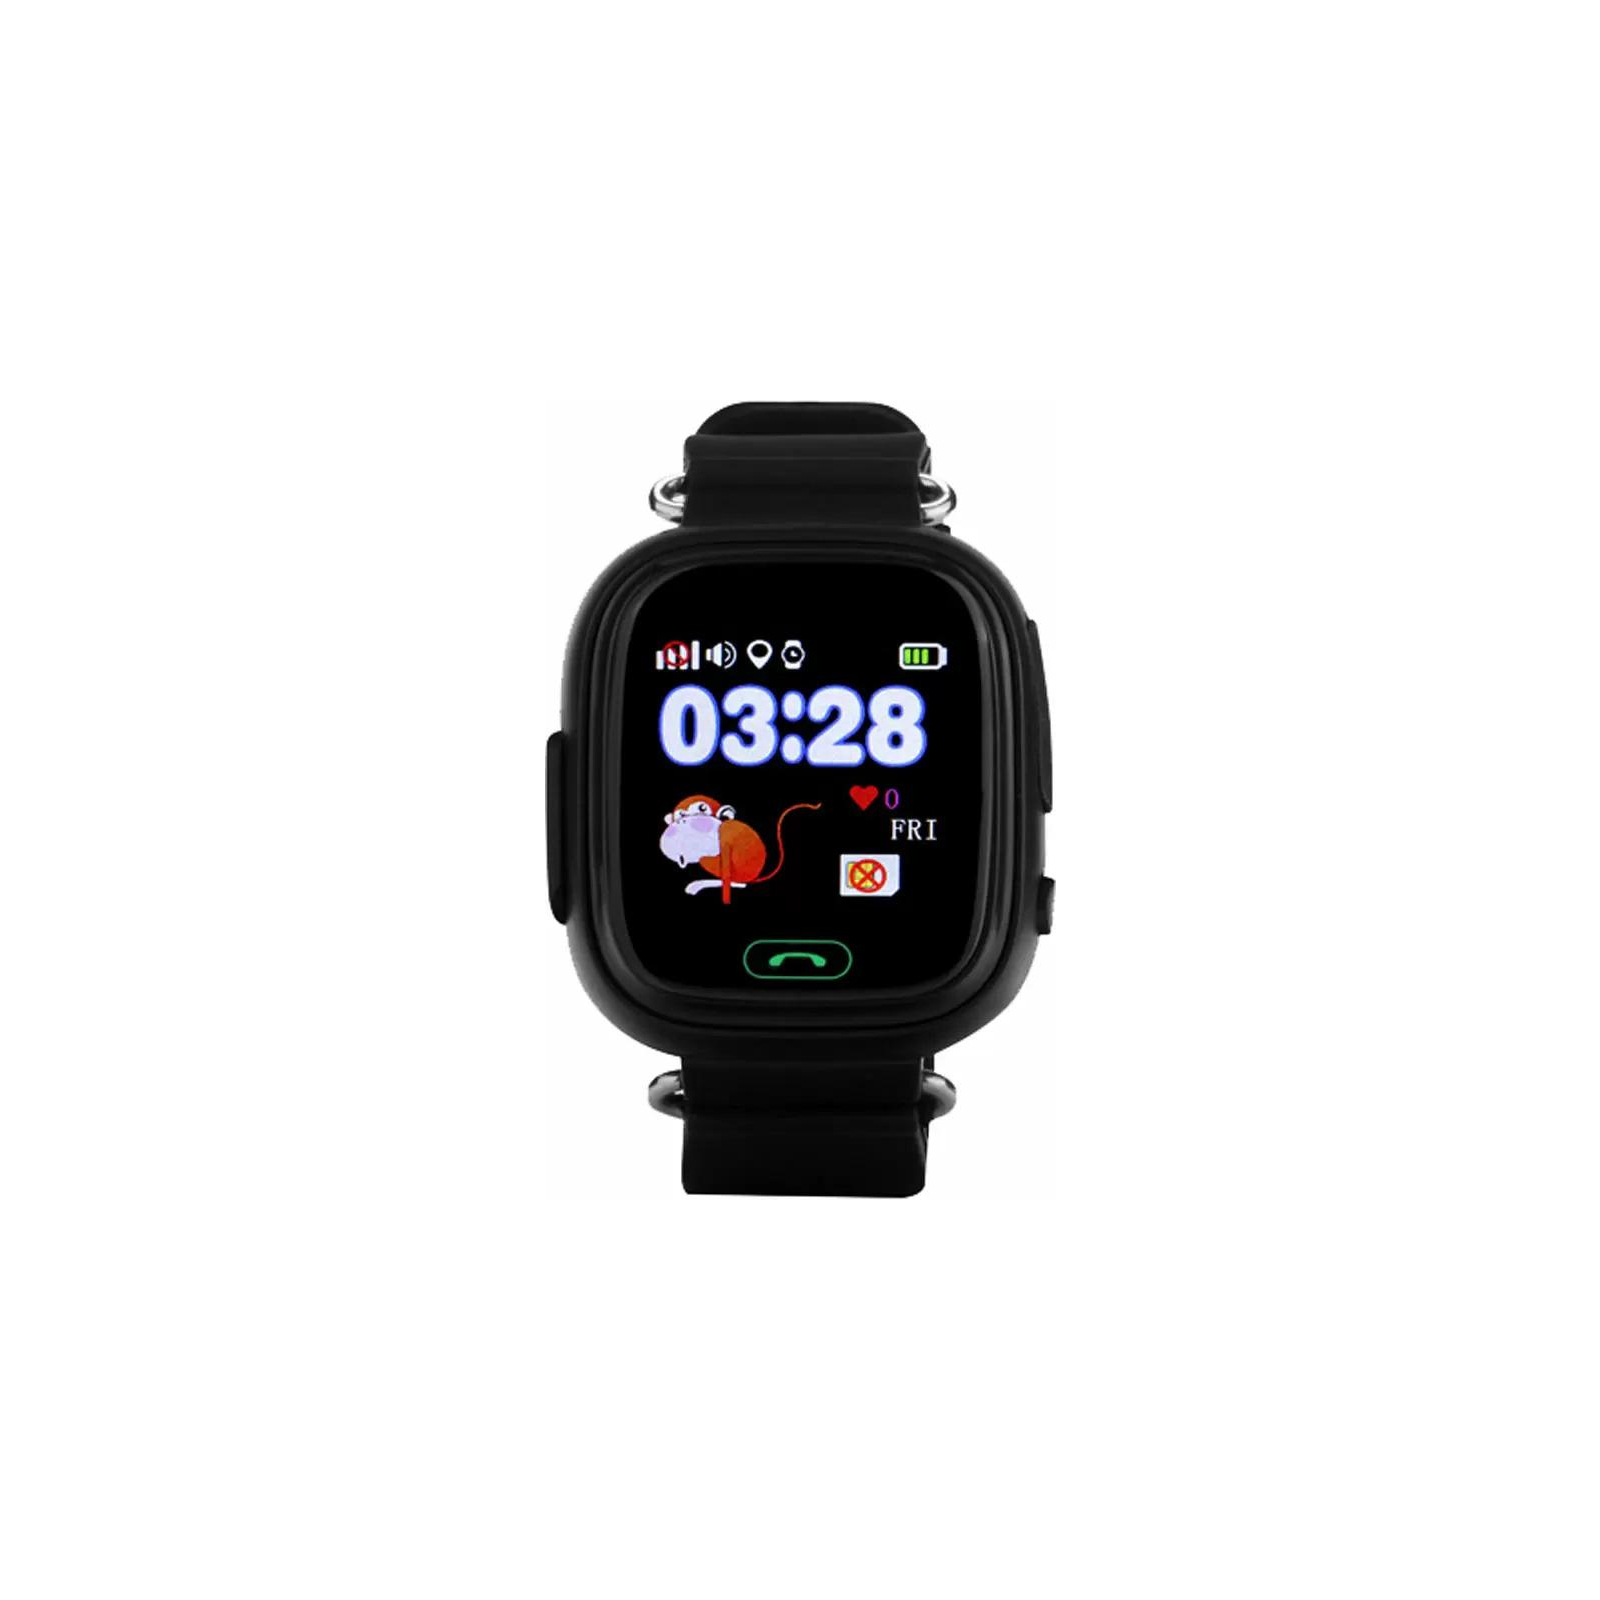 Смарт-часы UWatch Q90 Kid smart watch Blue (F_47453) изображение 2